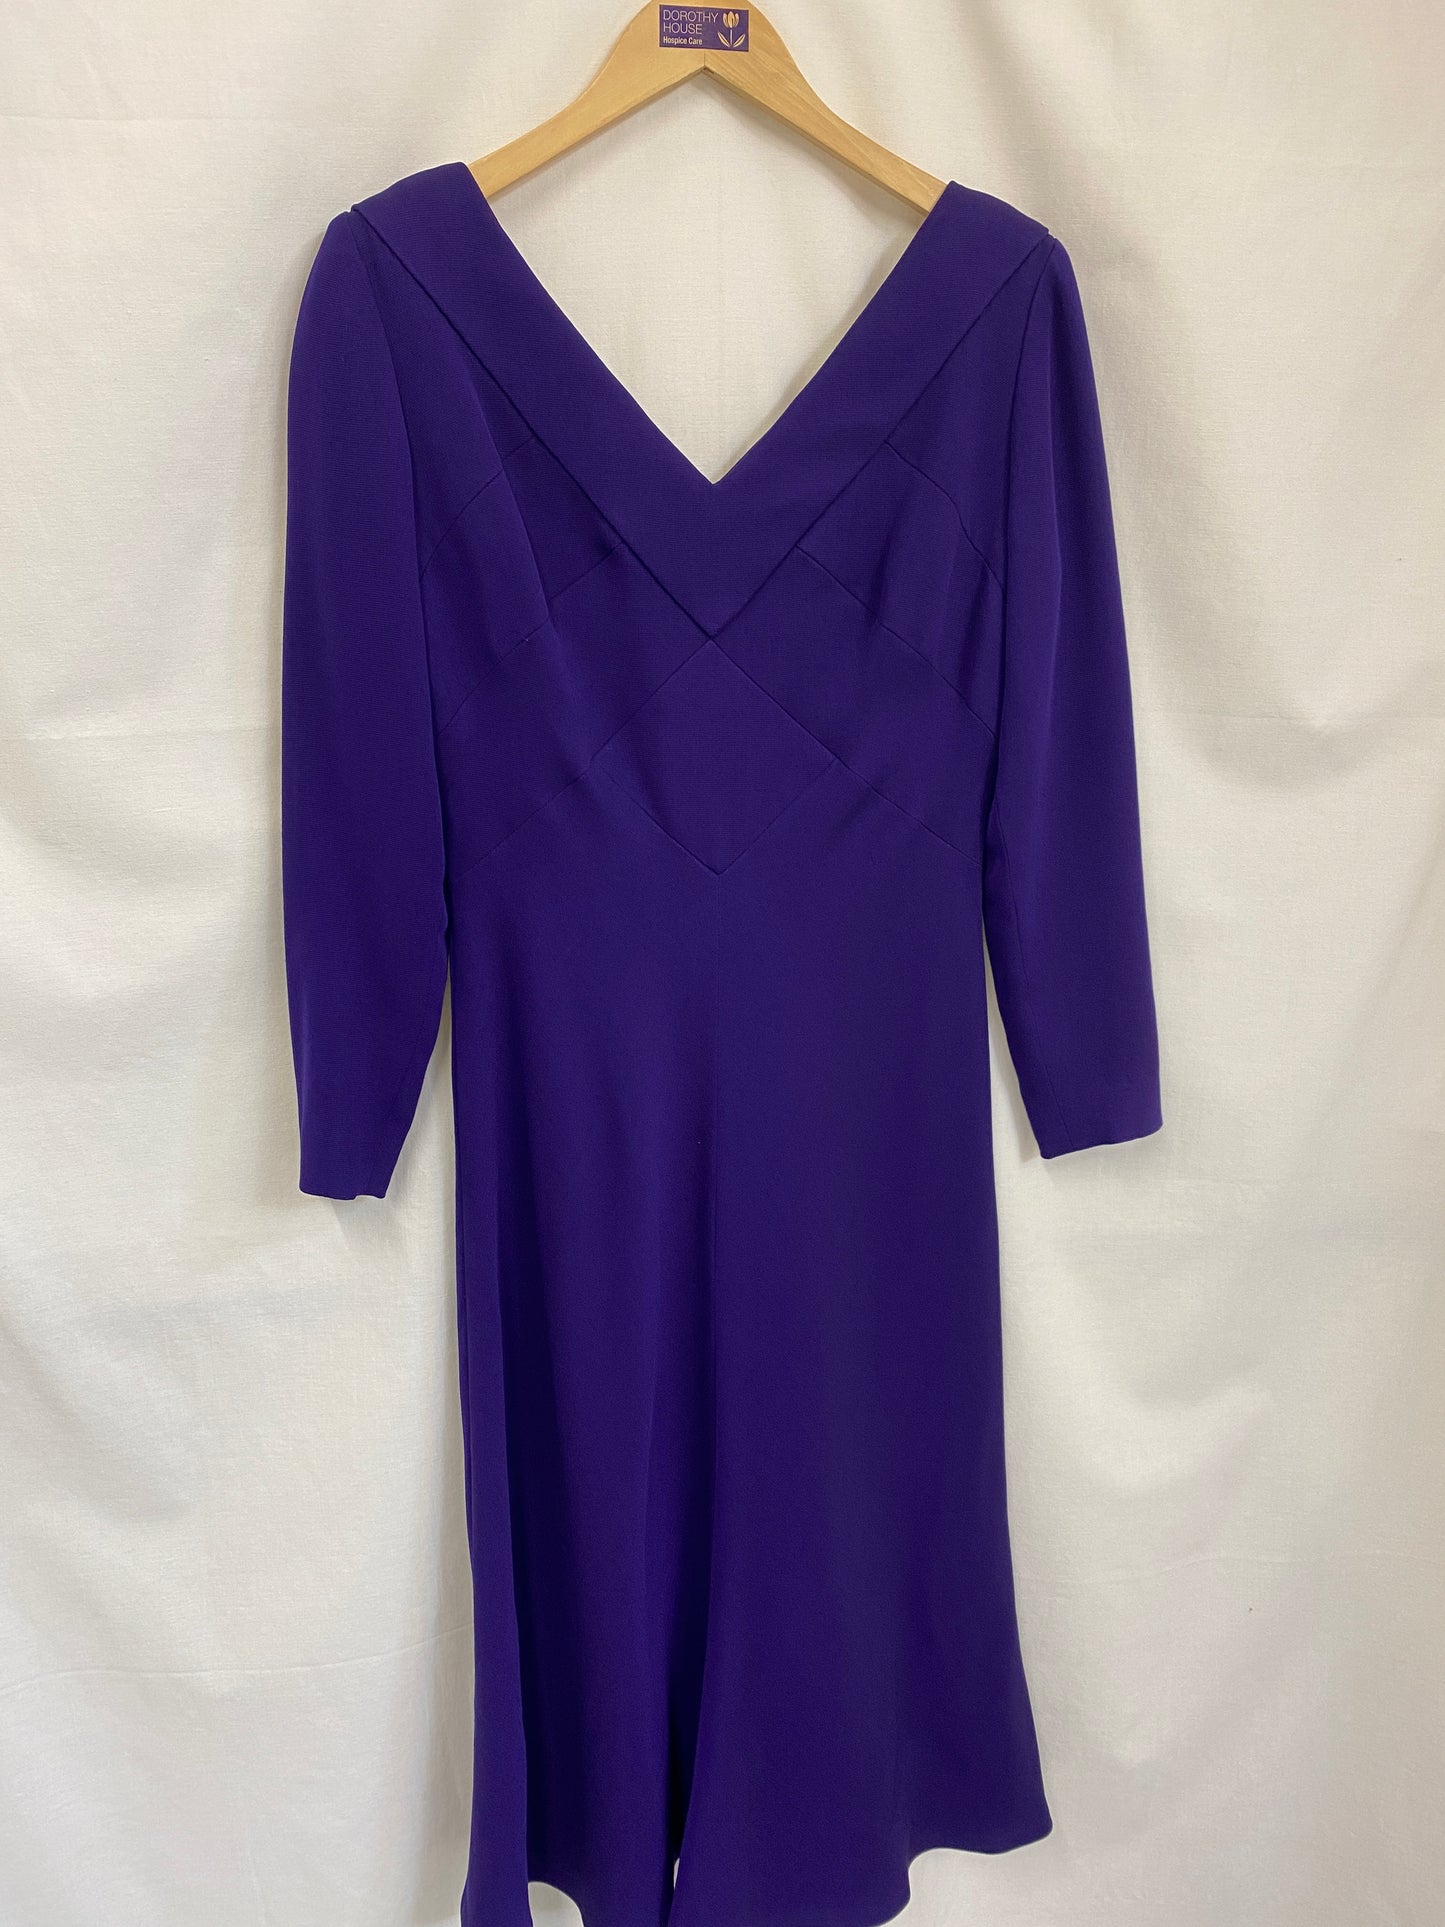 Vintage Purple Formal Dress Size 10/12